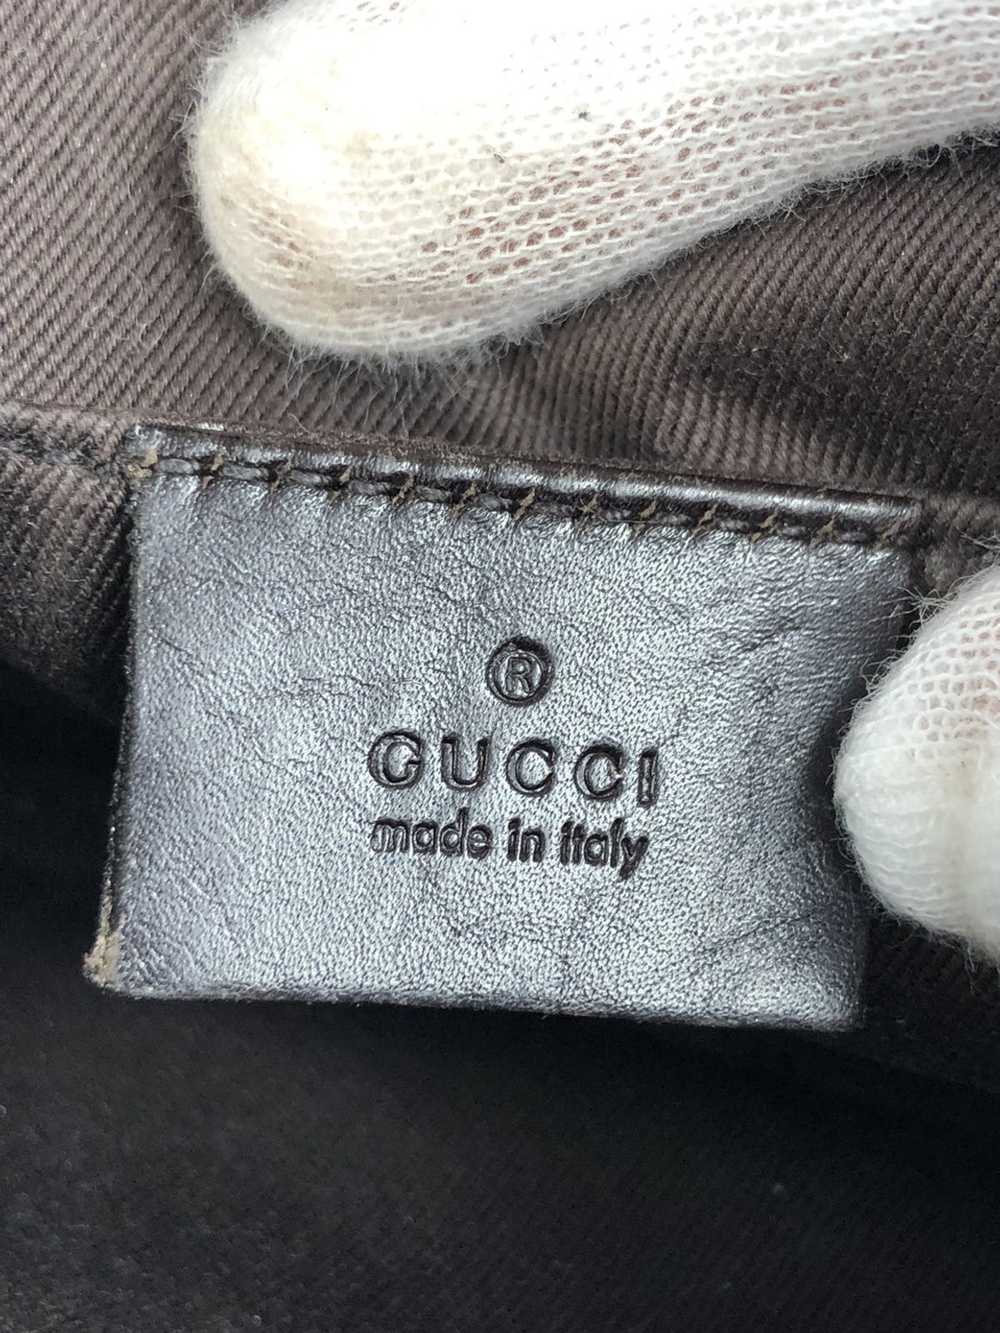 Gucci Gucci gg canvas monogram clutch bag - image 4